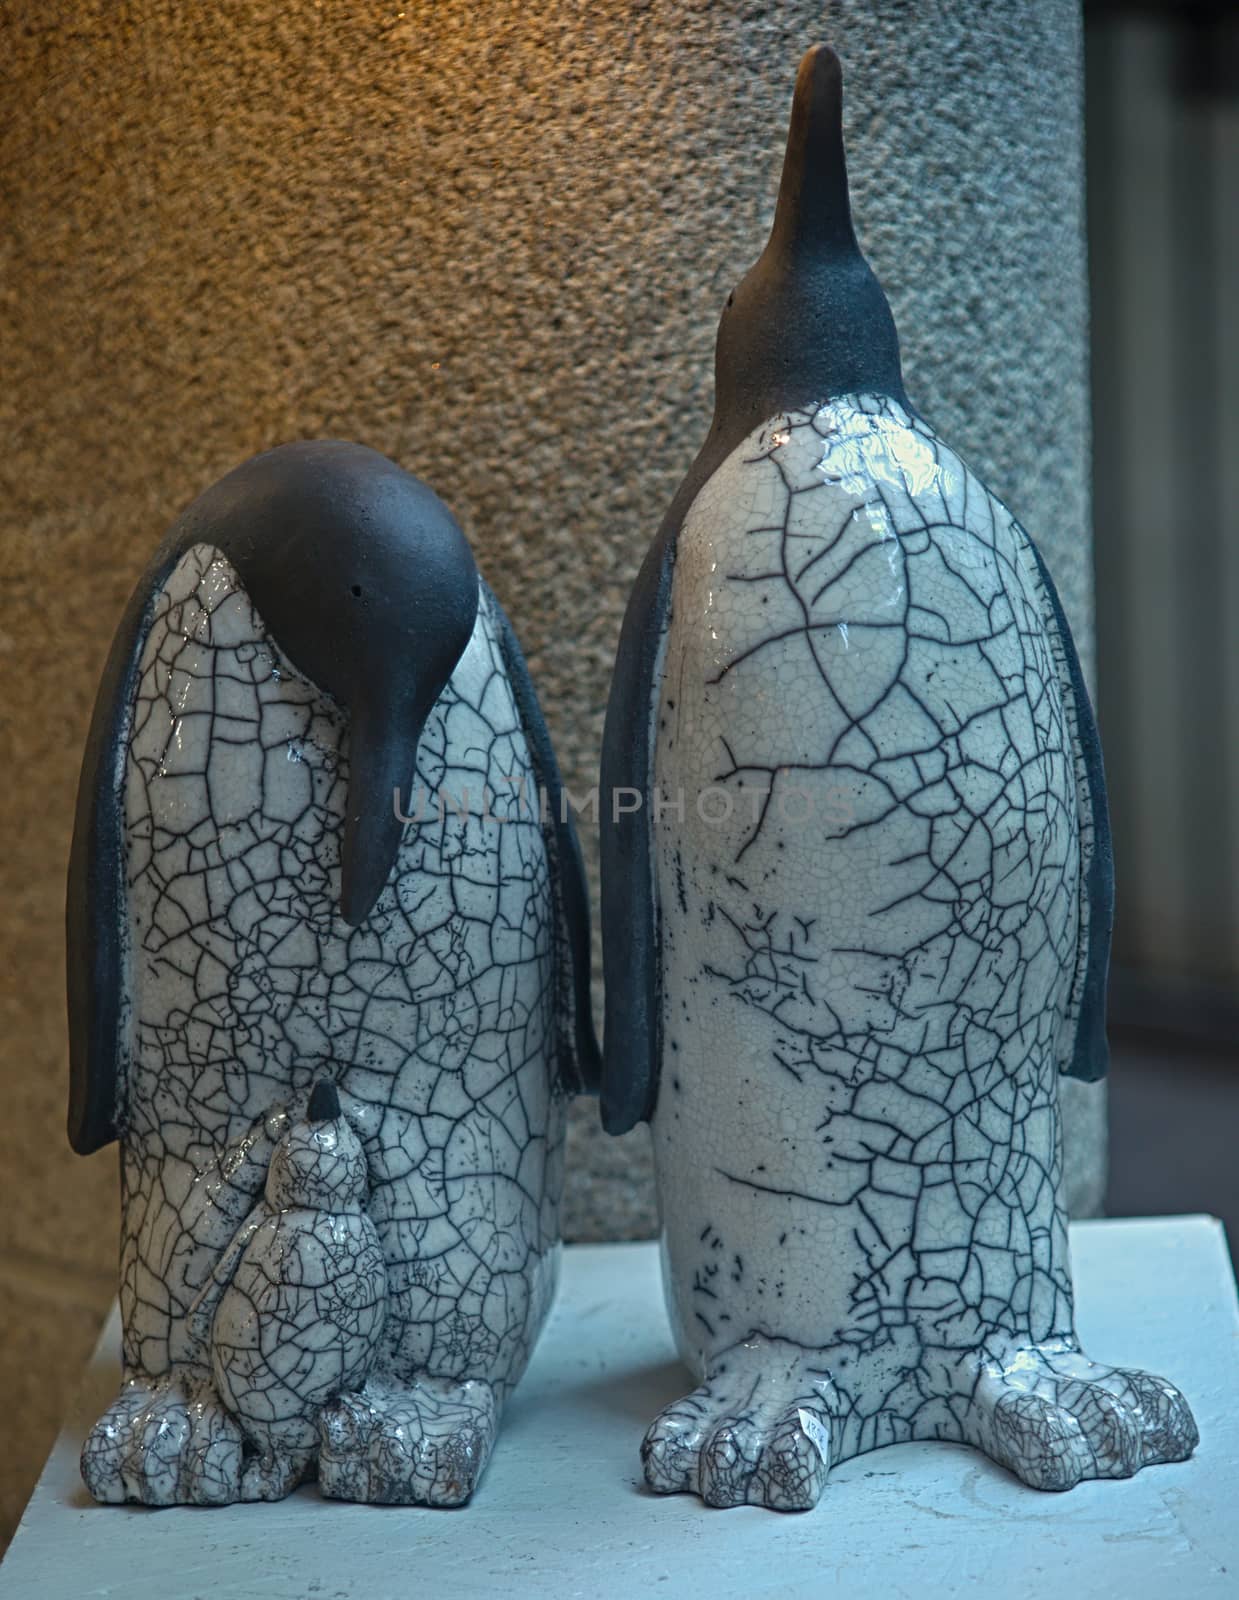 Ceramic figurines of penguins on wooden shelf